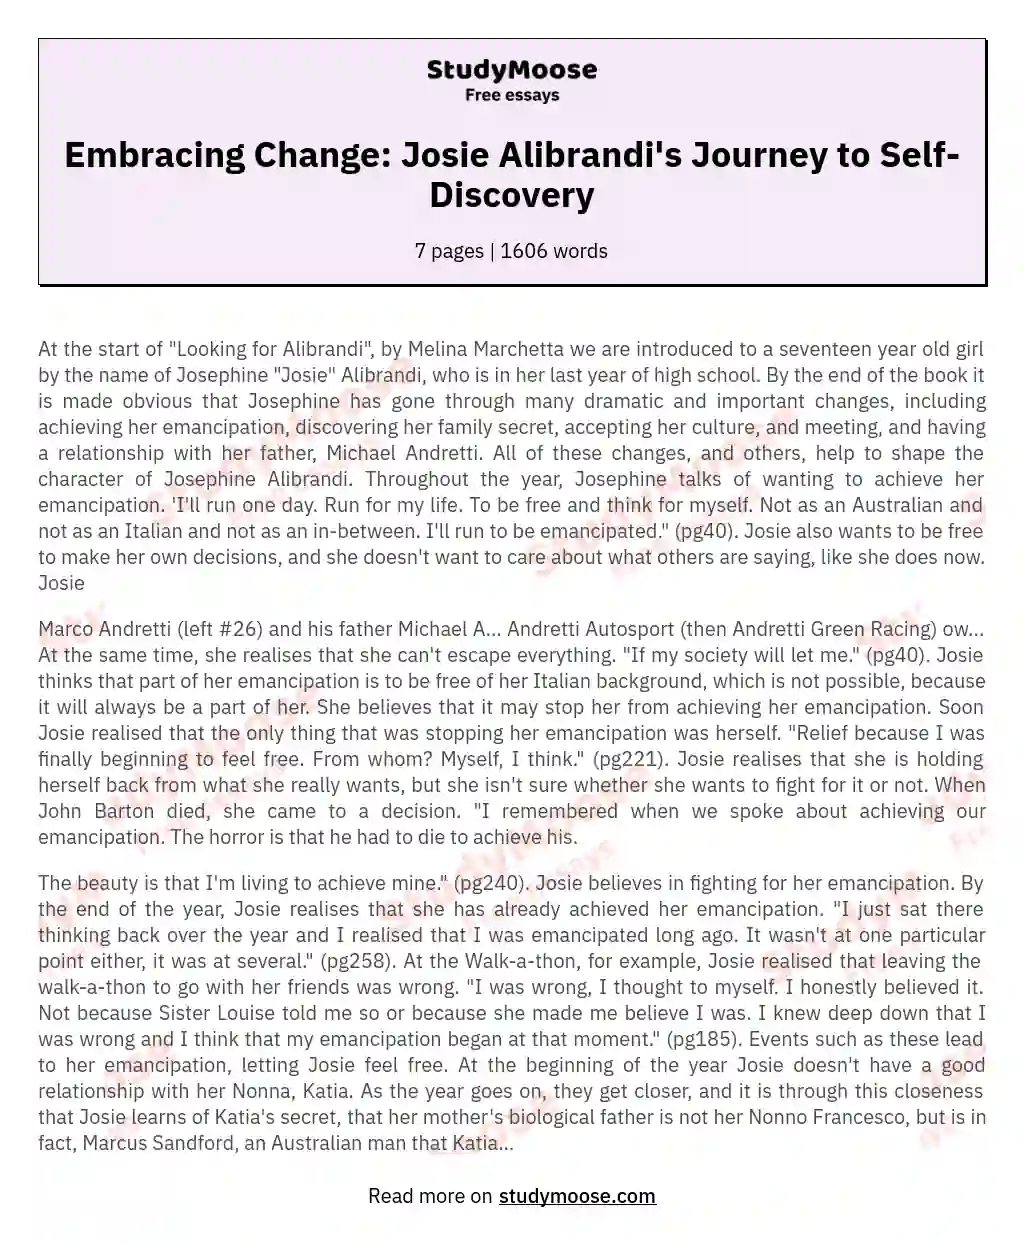 Embracing Change: Josie Alibrandi's Journey to Self-Discovery essay